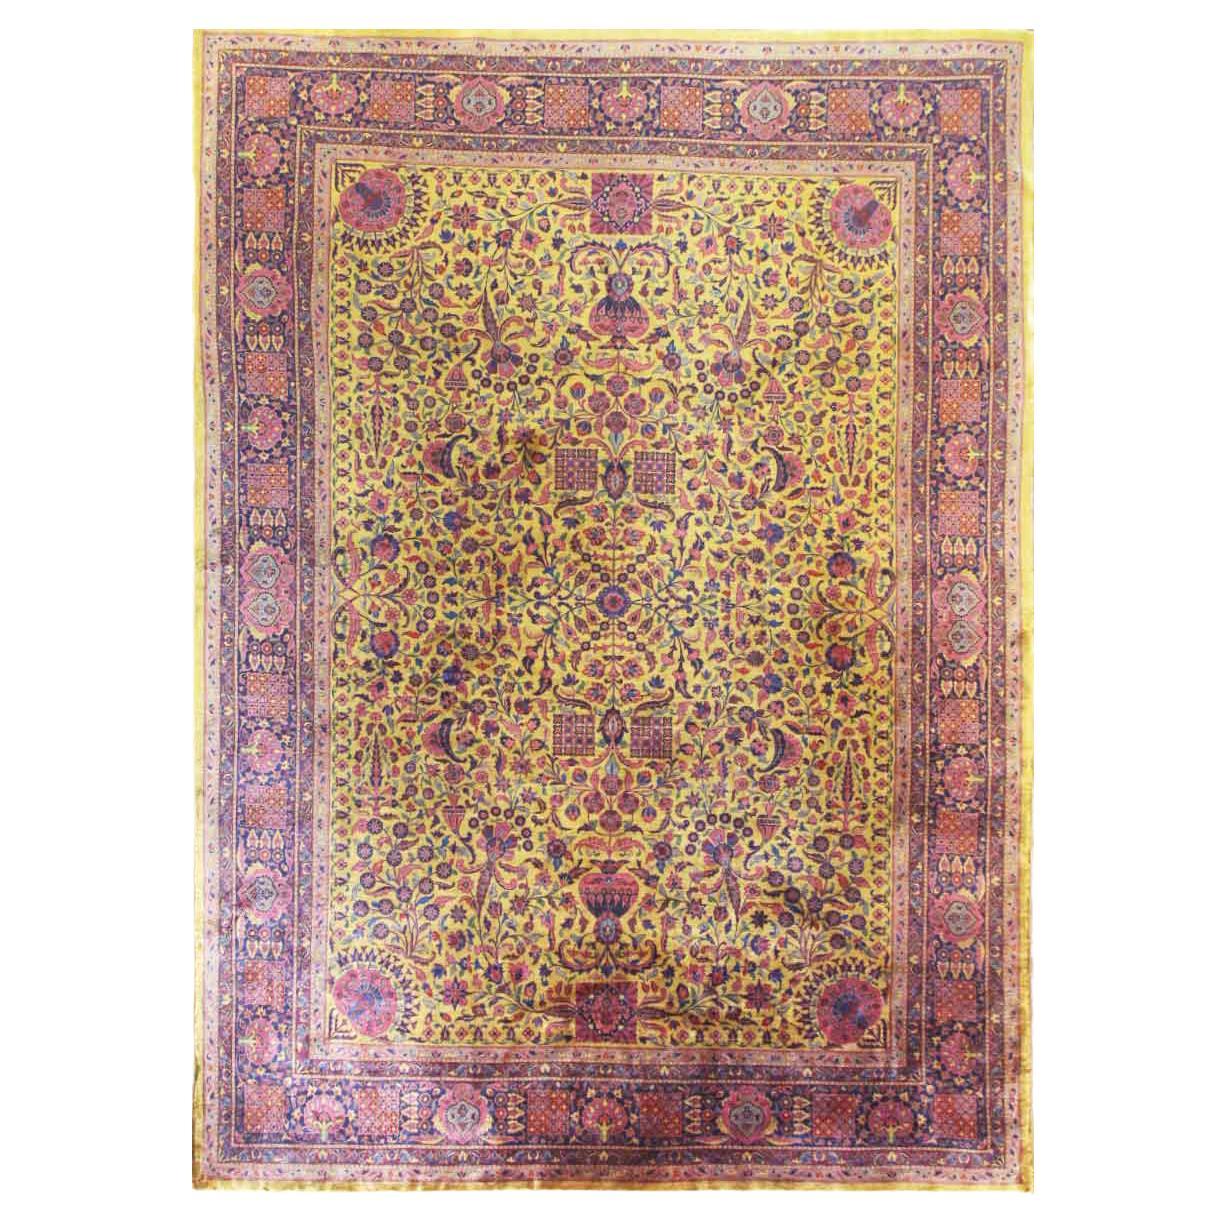 Antique Golden Manchester Kashan Carpet, The Finest, 10' x 14' For Sale